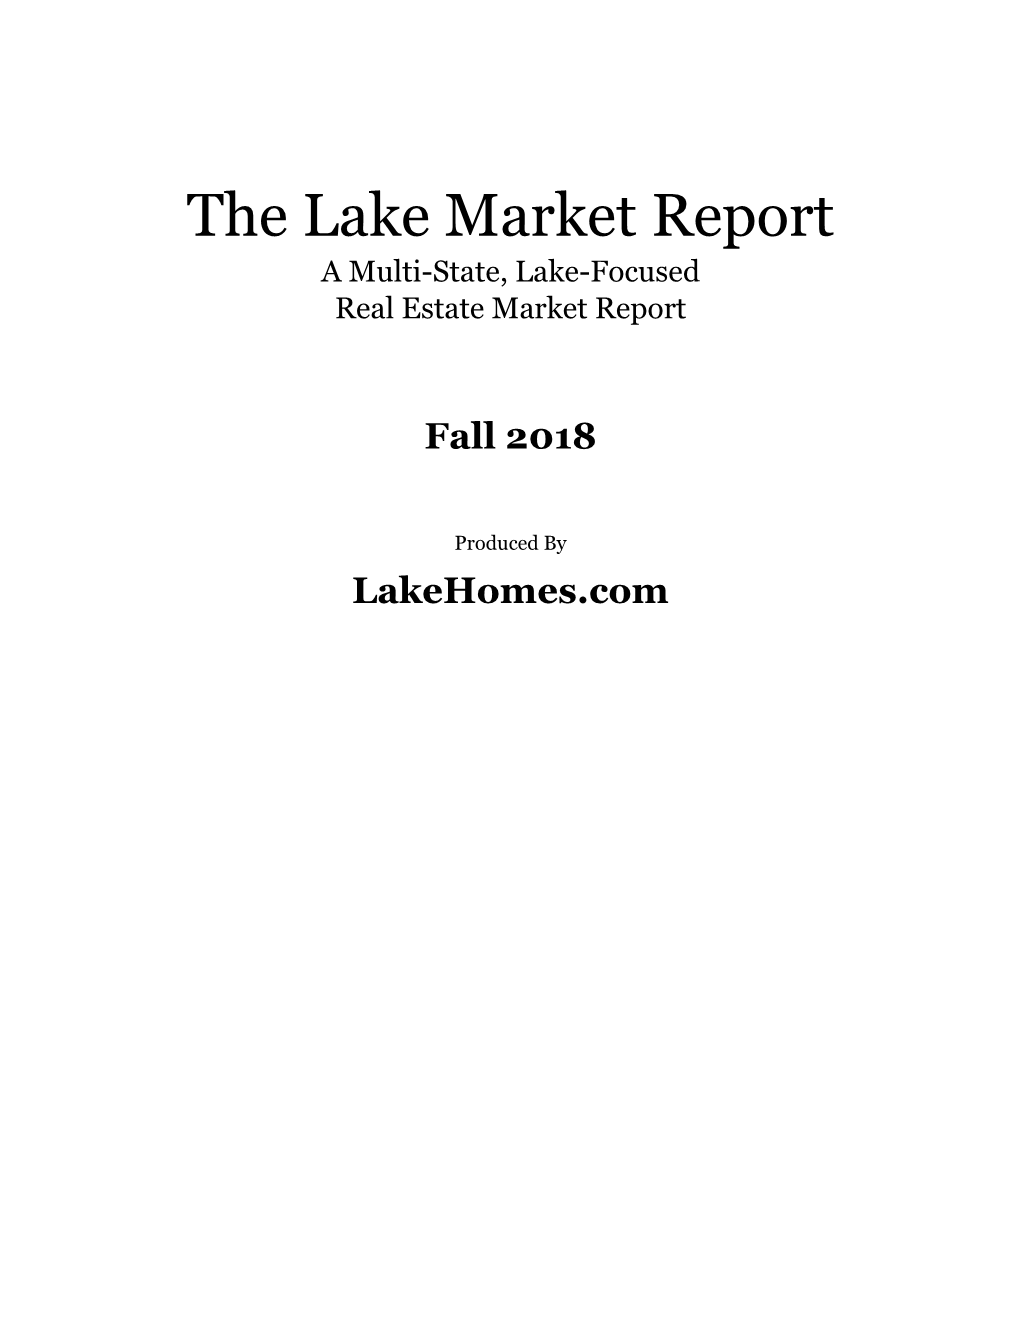 The Lake Market Report a Multi-State, Lake-Focused Real Estate Market Report